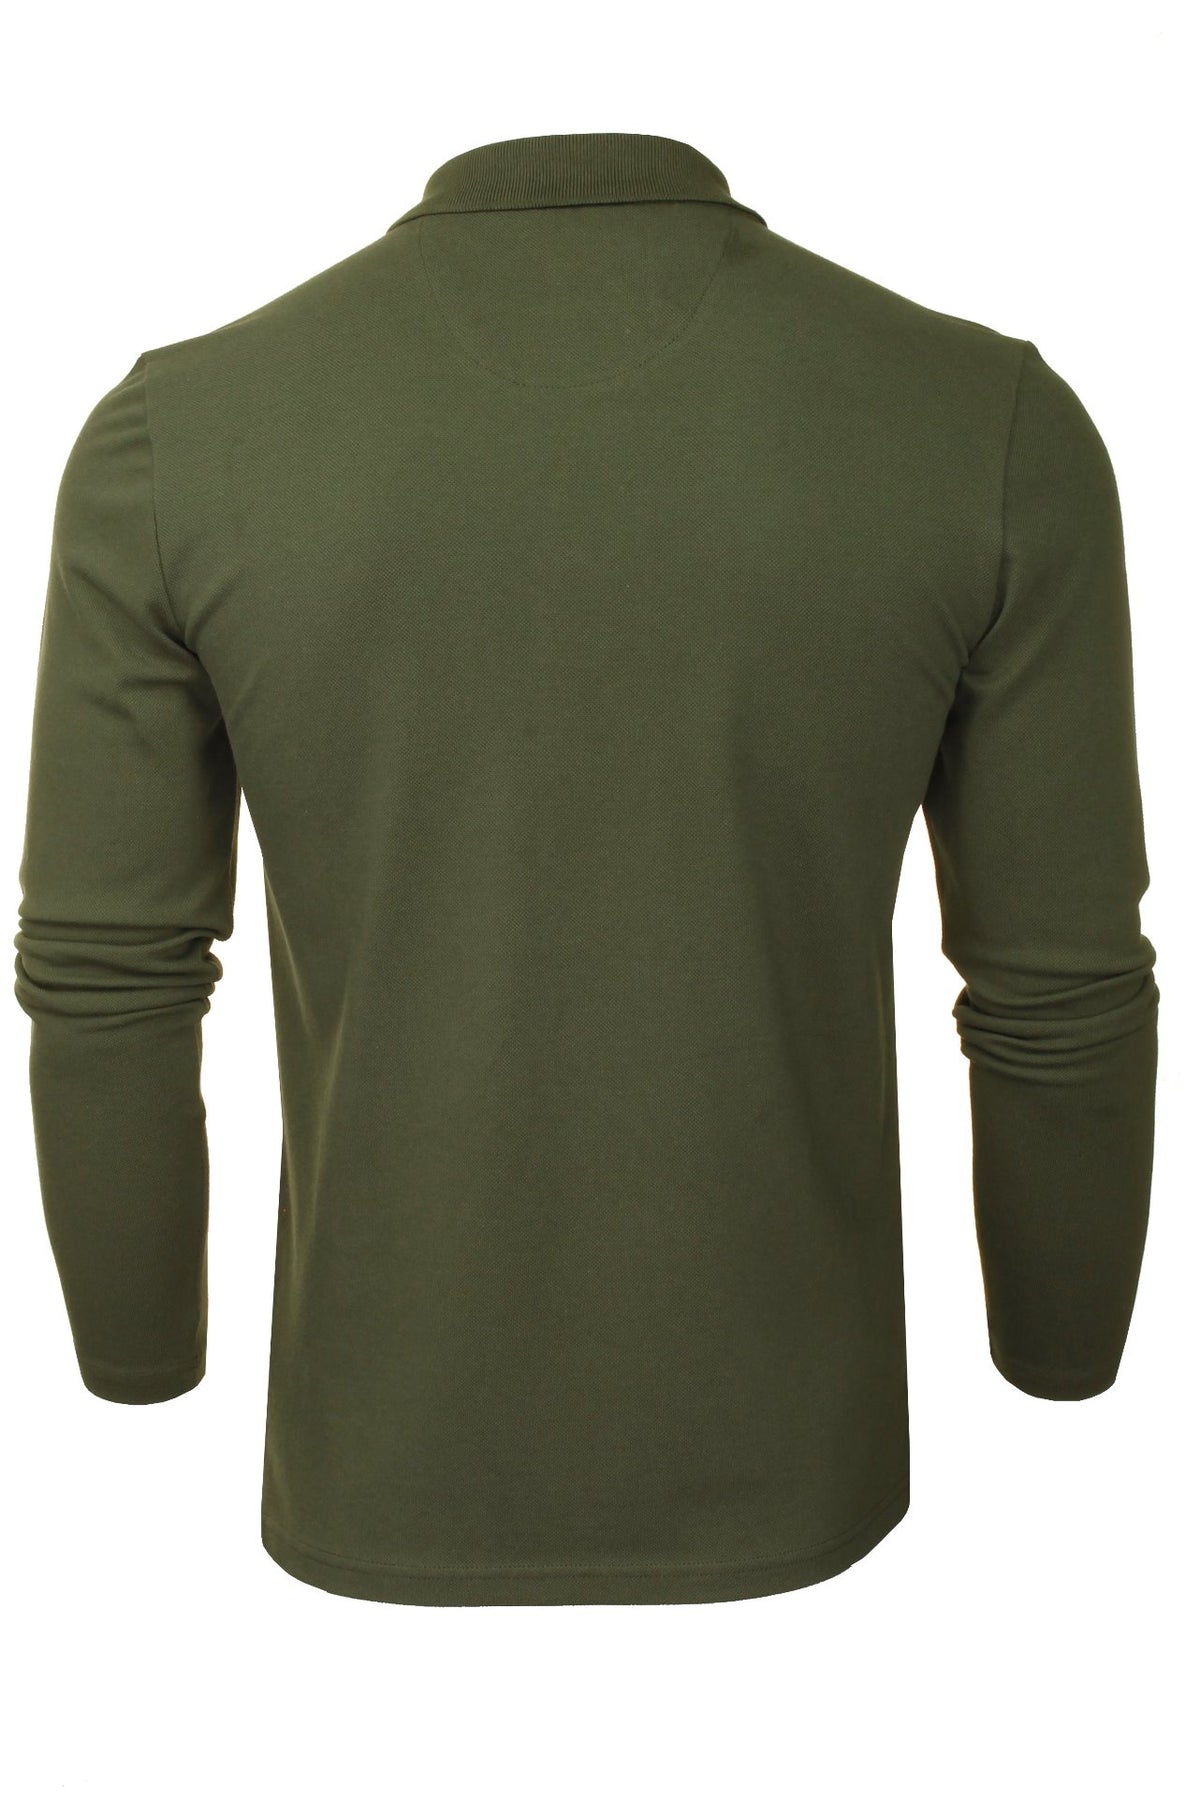 Xact Mens Polo T-Shirt Pique Long Sleeved, 03, XP1003, Khaki